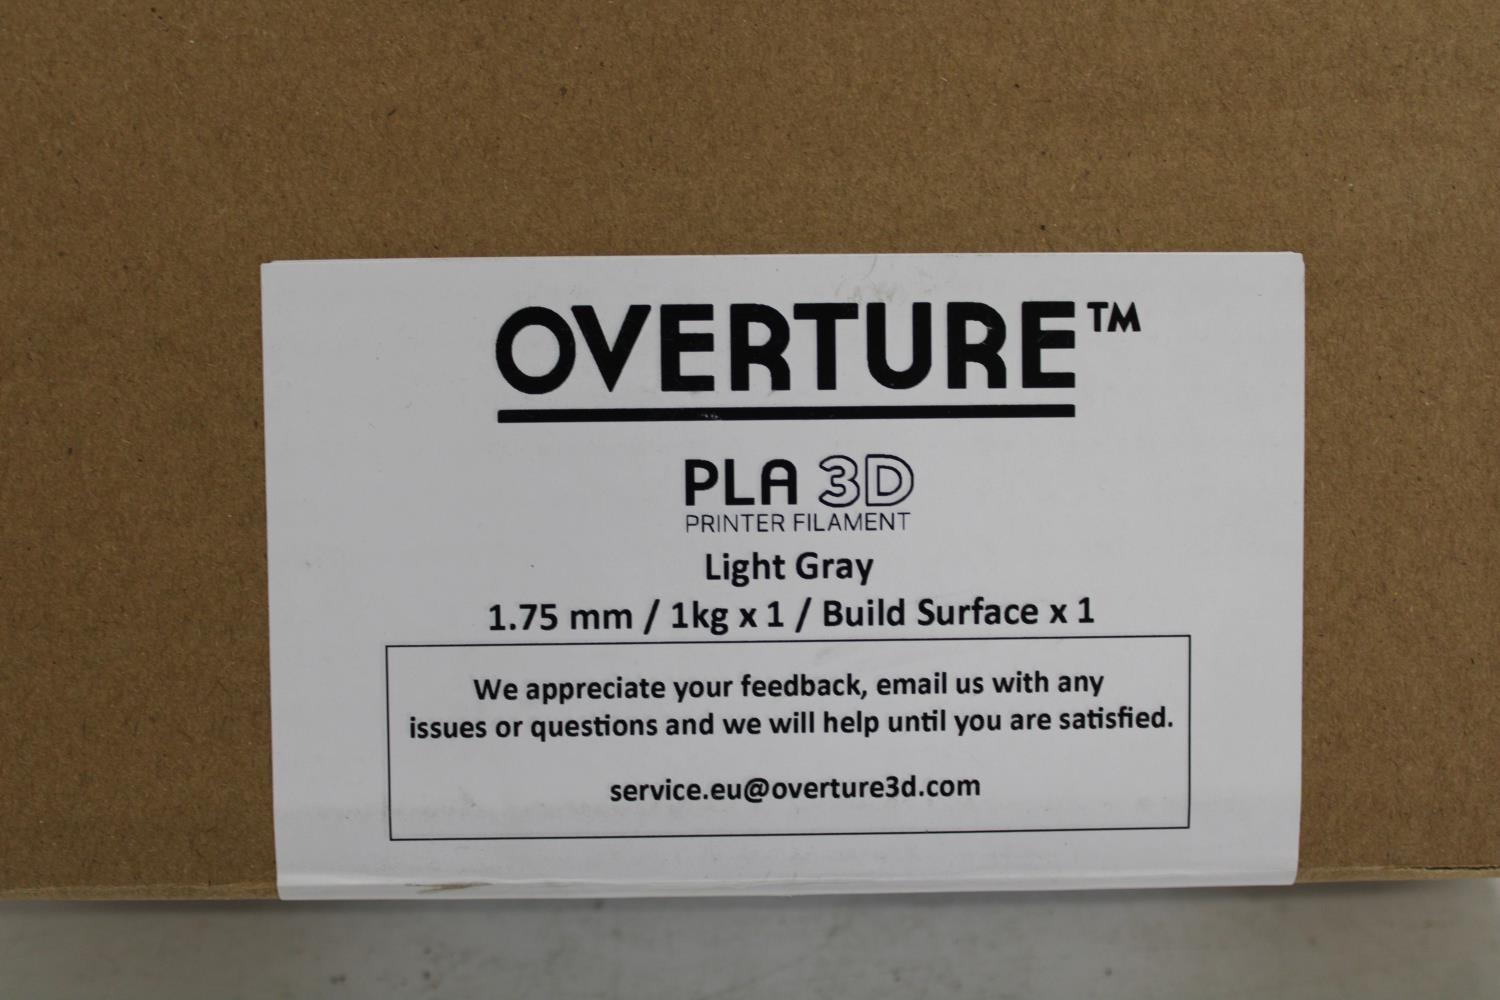 A reel of light grey Overture 3D printer filament